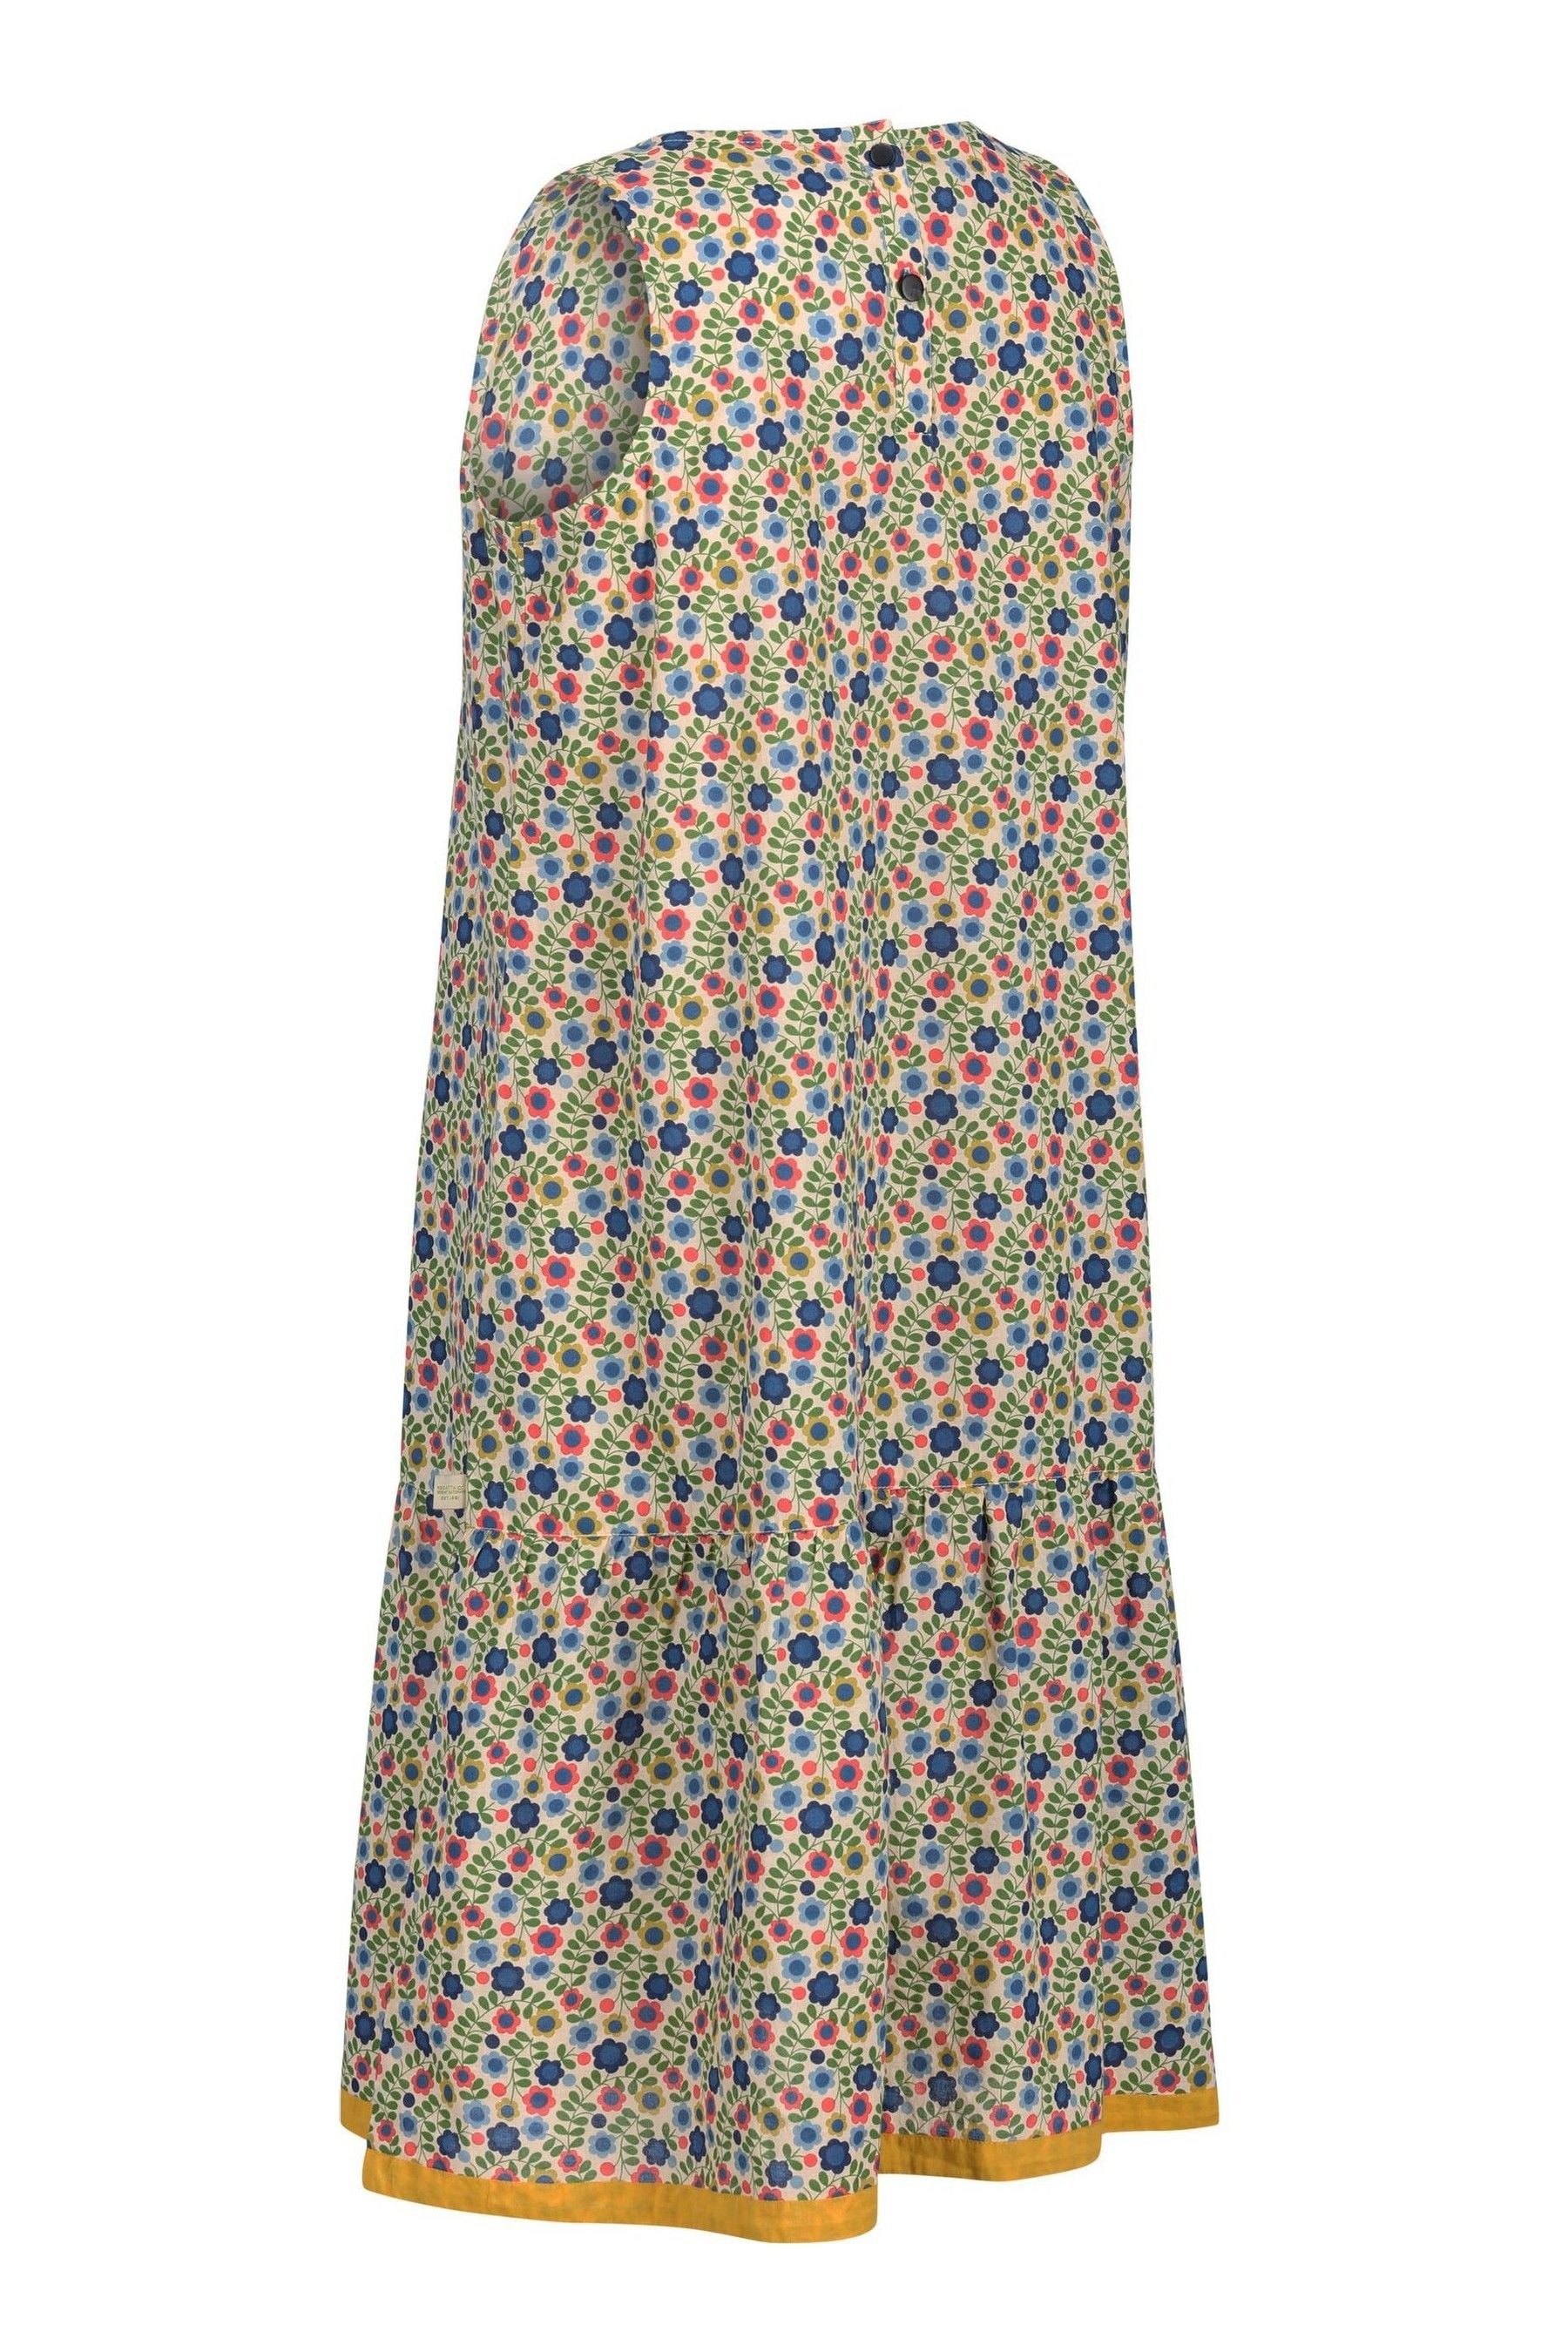 Buy Regatta Green Orla Kiely Summer Dress from the Next UK online shop